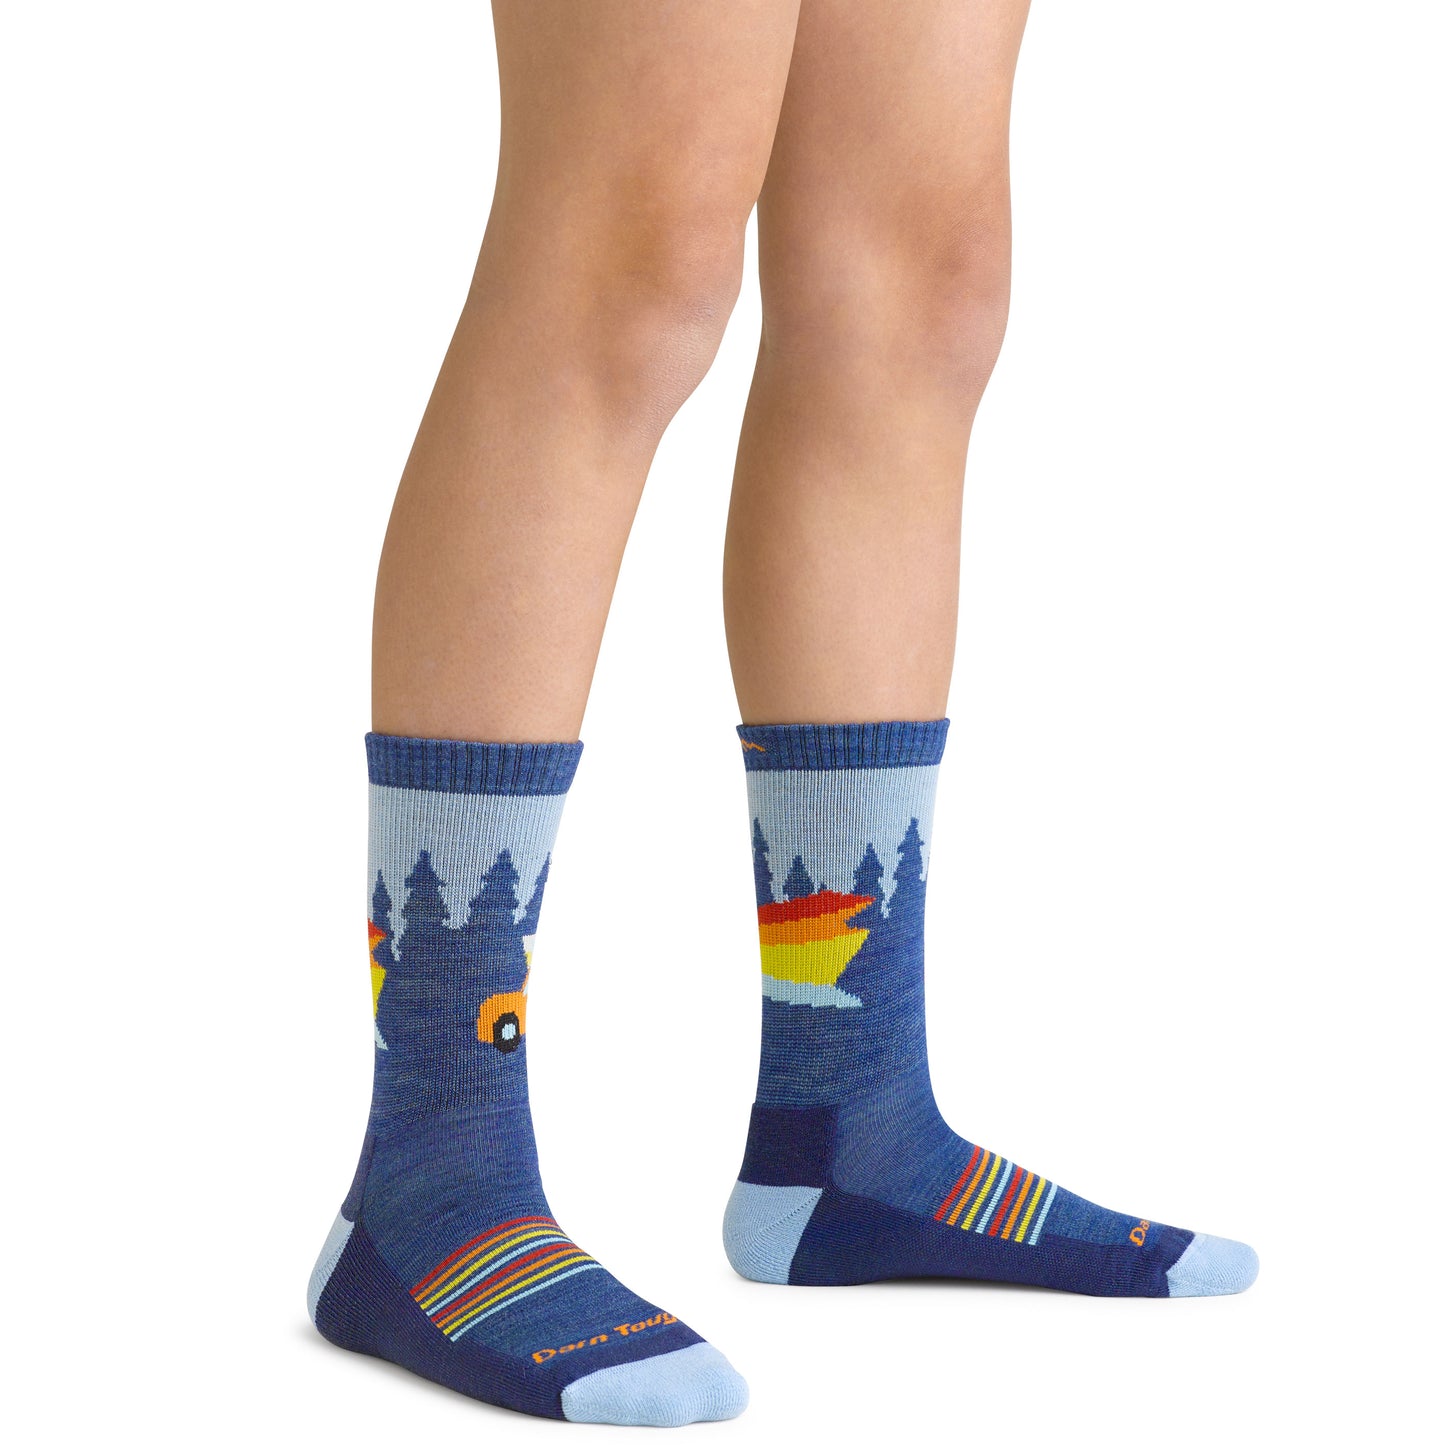 Children's Darn Tough 3037 sock in Denim on model